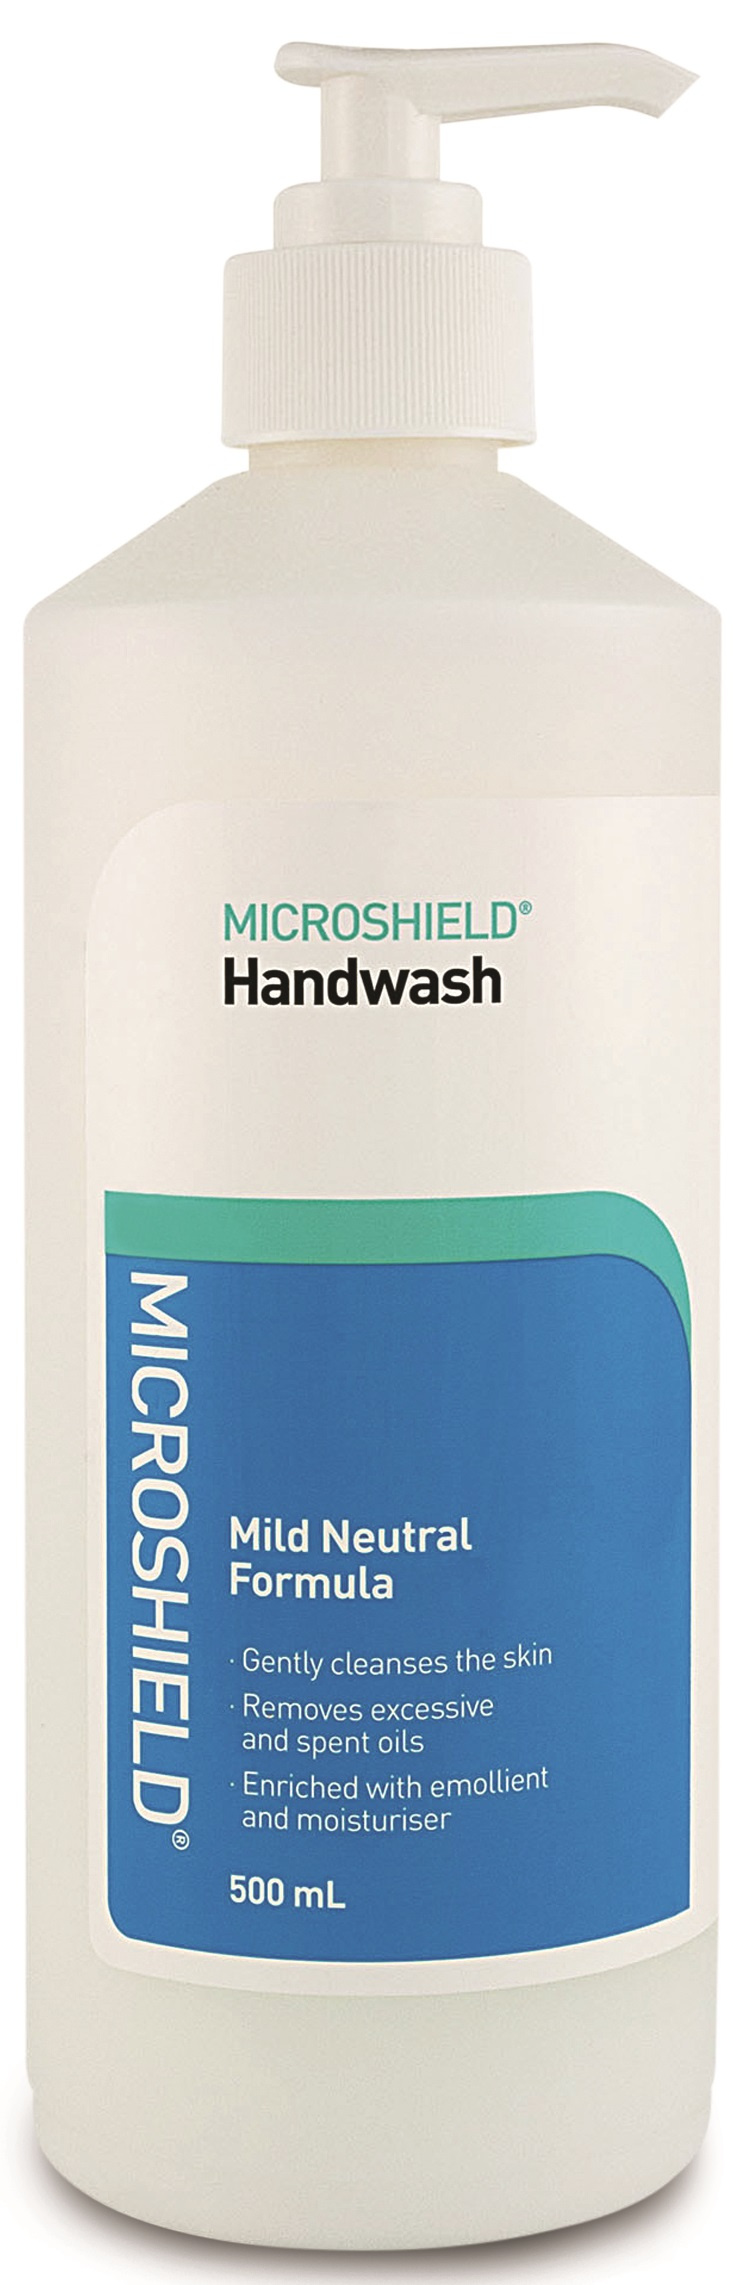 Microshield Handwash 500ml